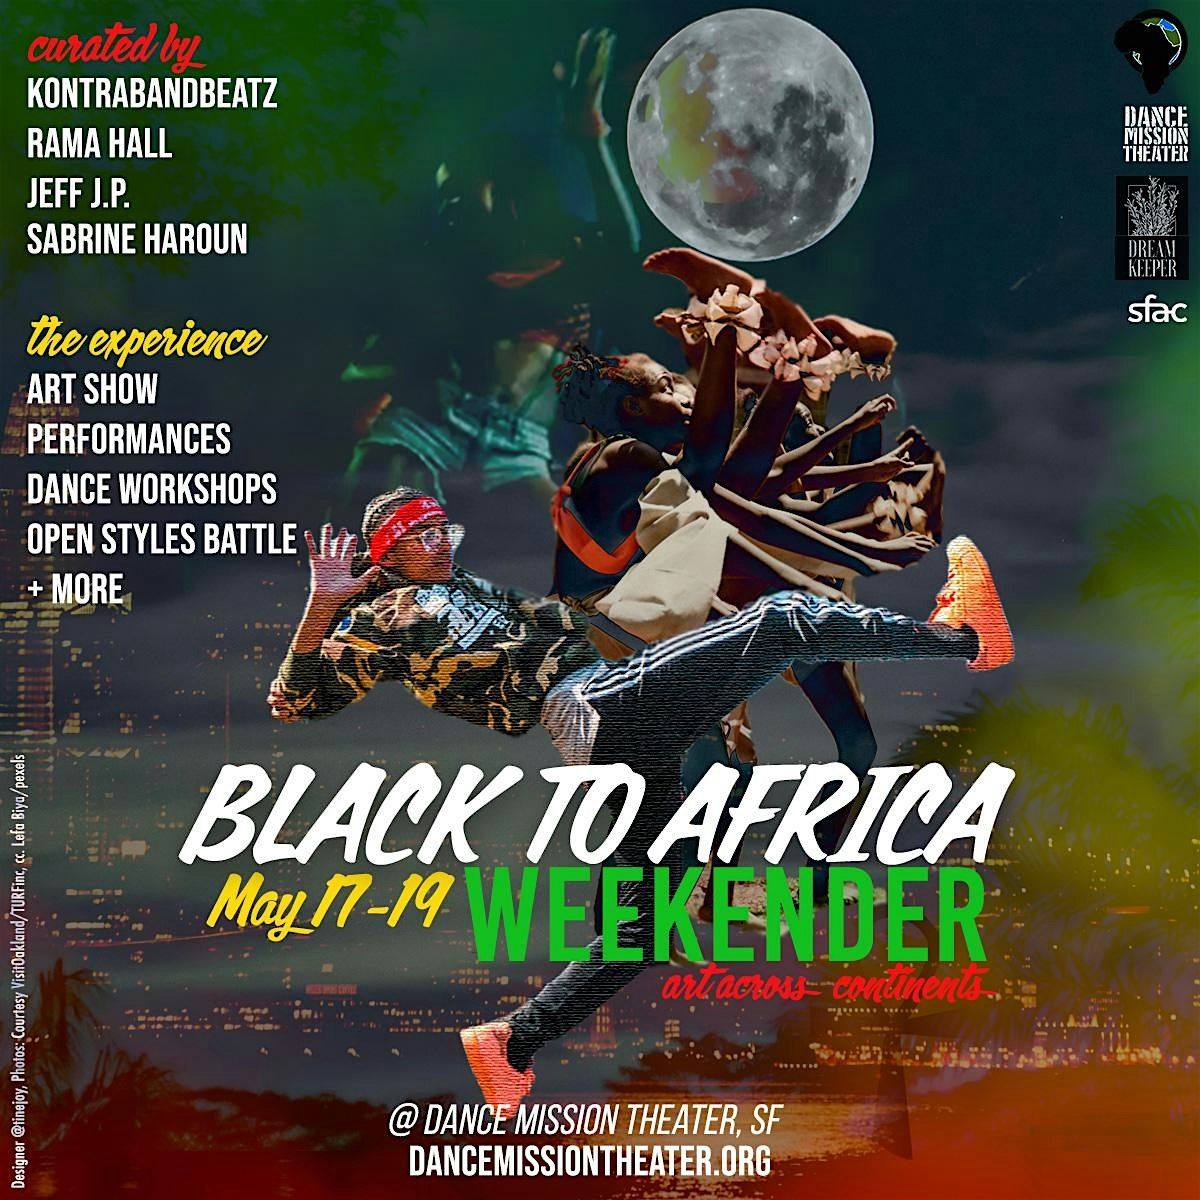 Black to Africa Weekender - ART SHOW + PERFORMANCE